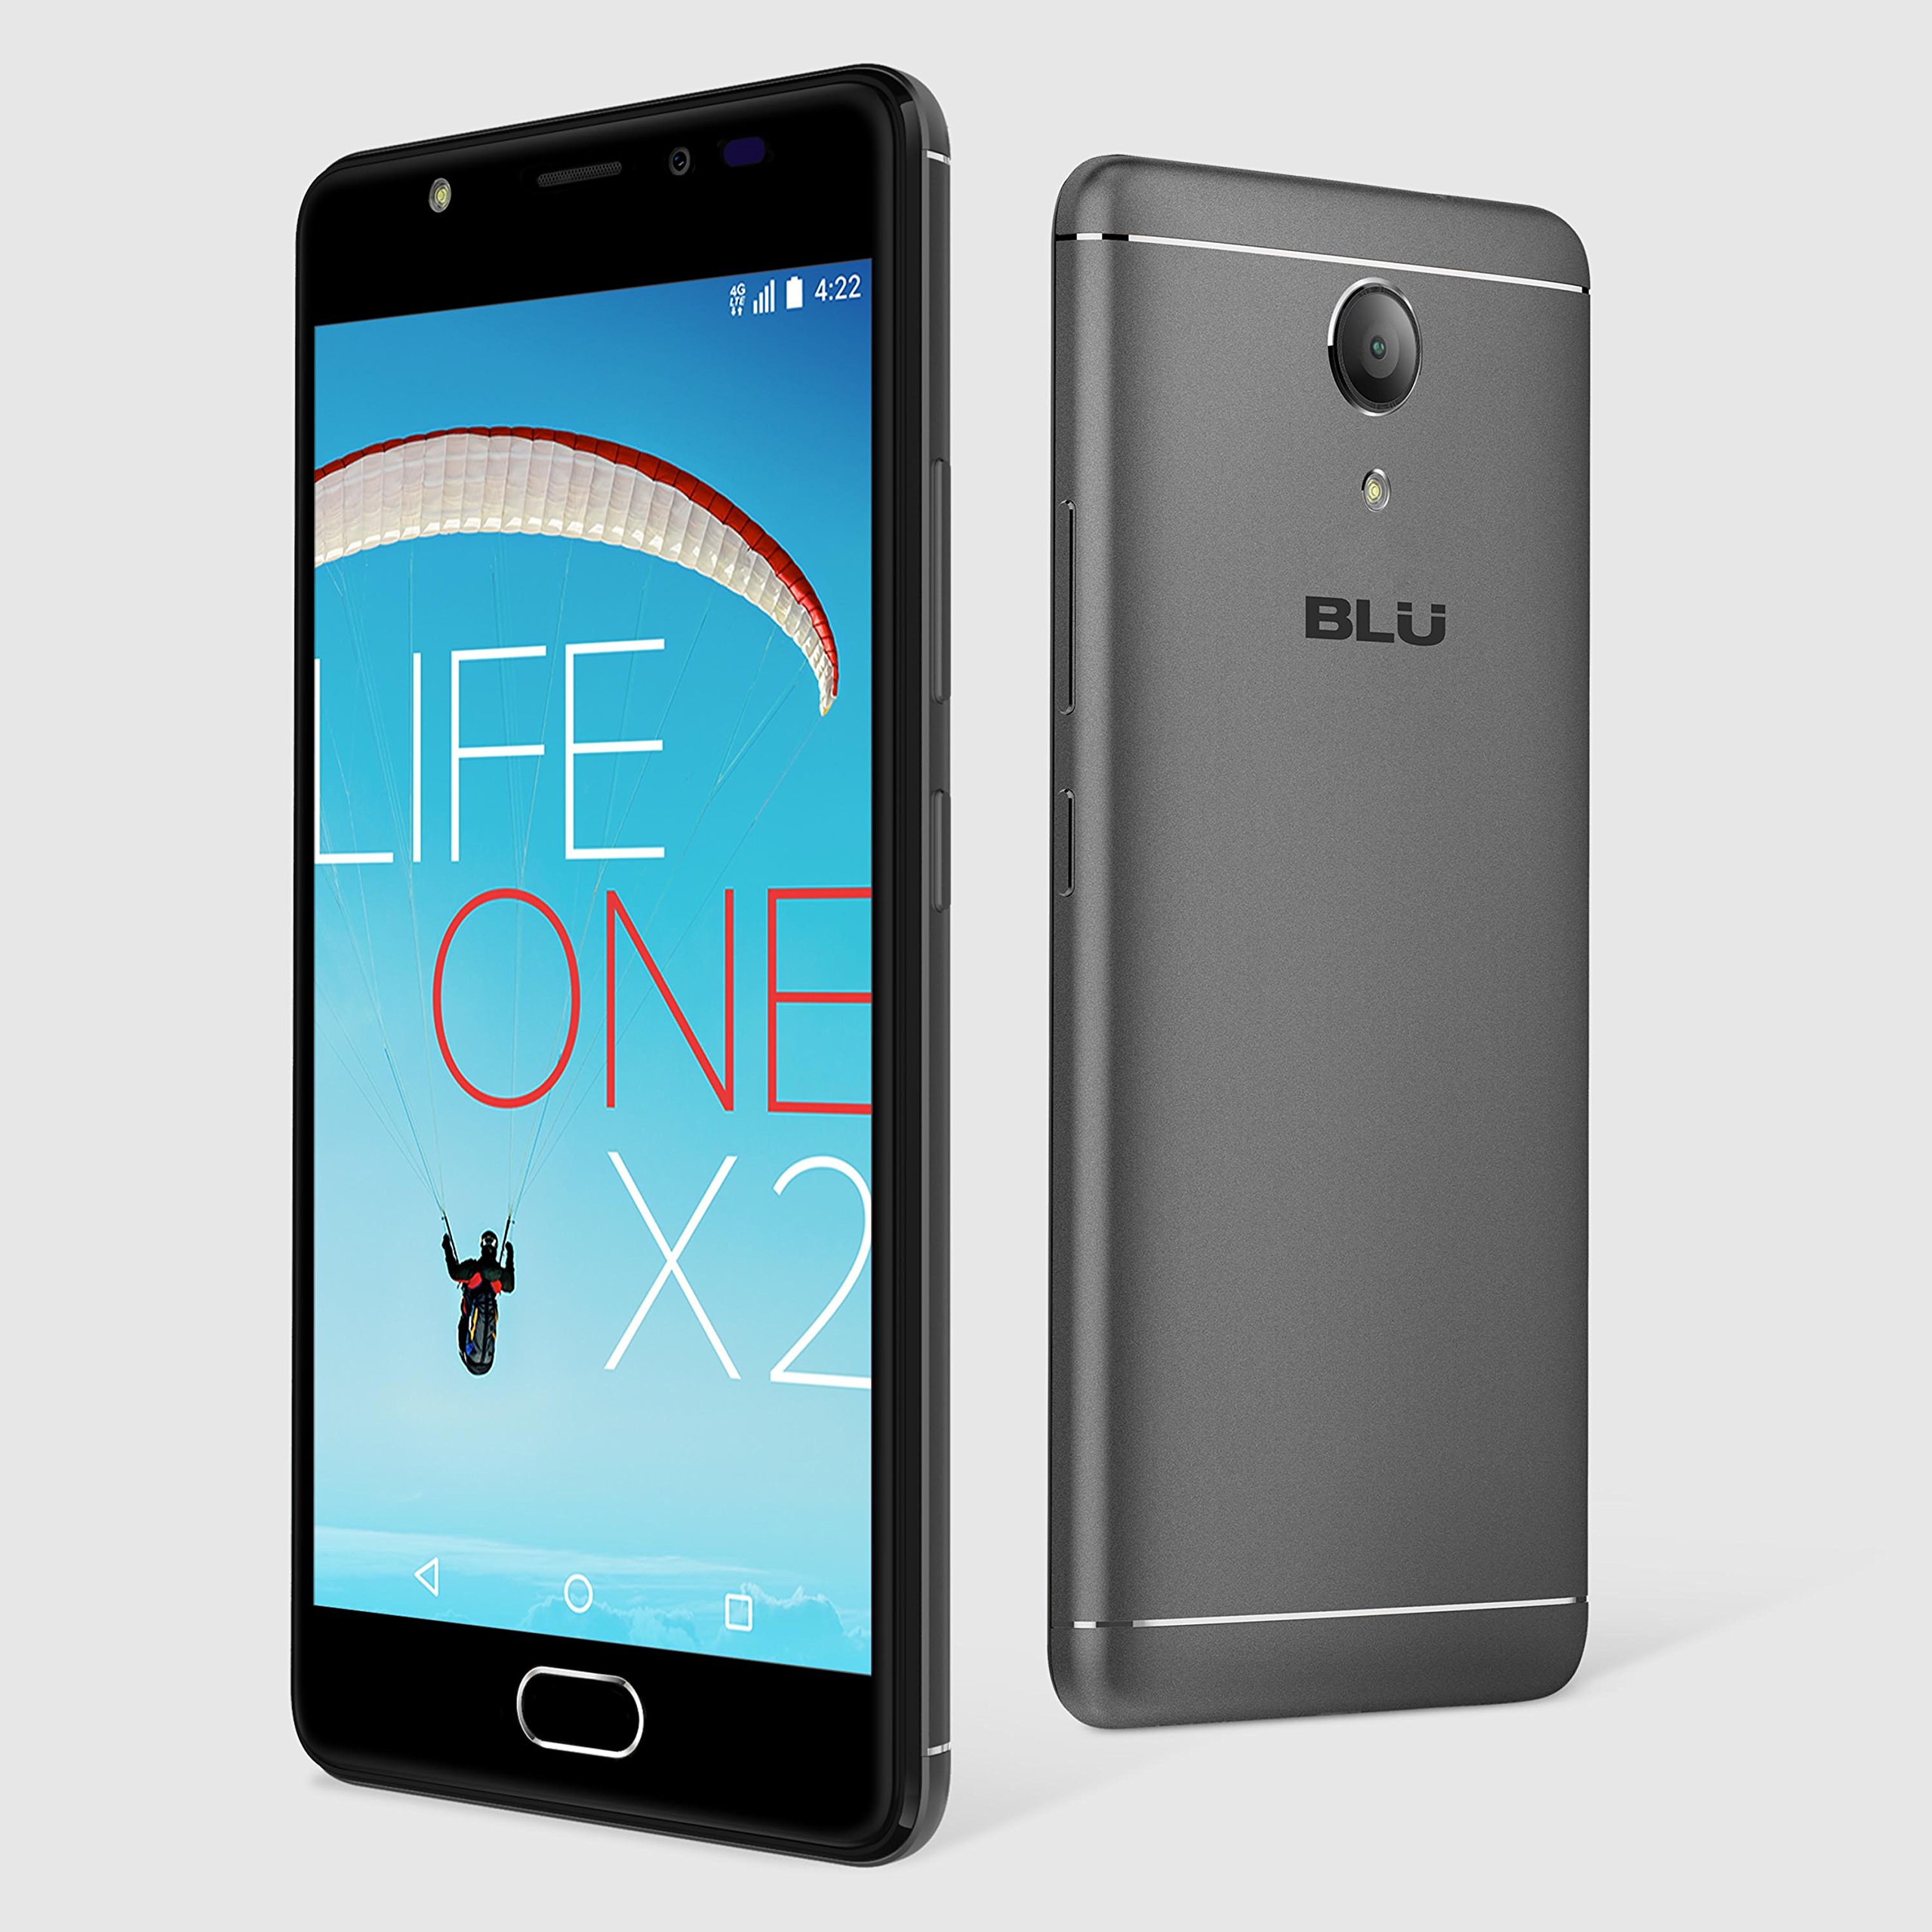 BLU LIFE ONE X2 - 4G LTE Unlocked Smartphone - 16GB+2GB RAM - Grey